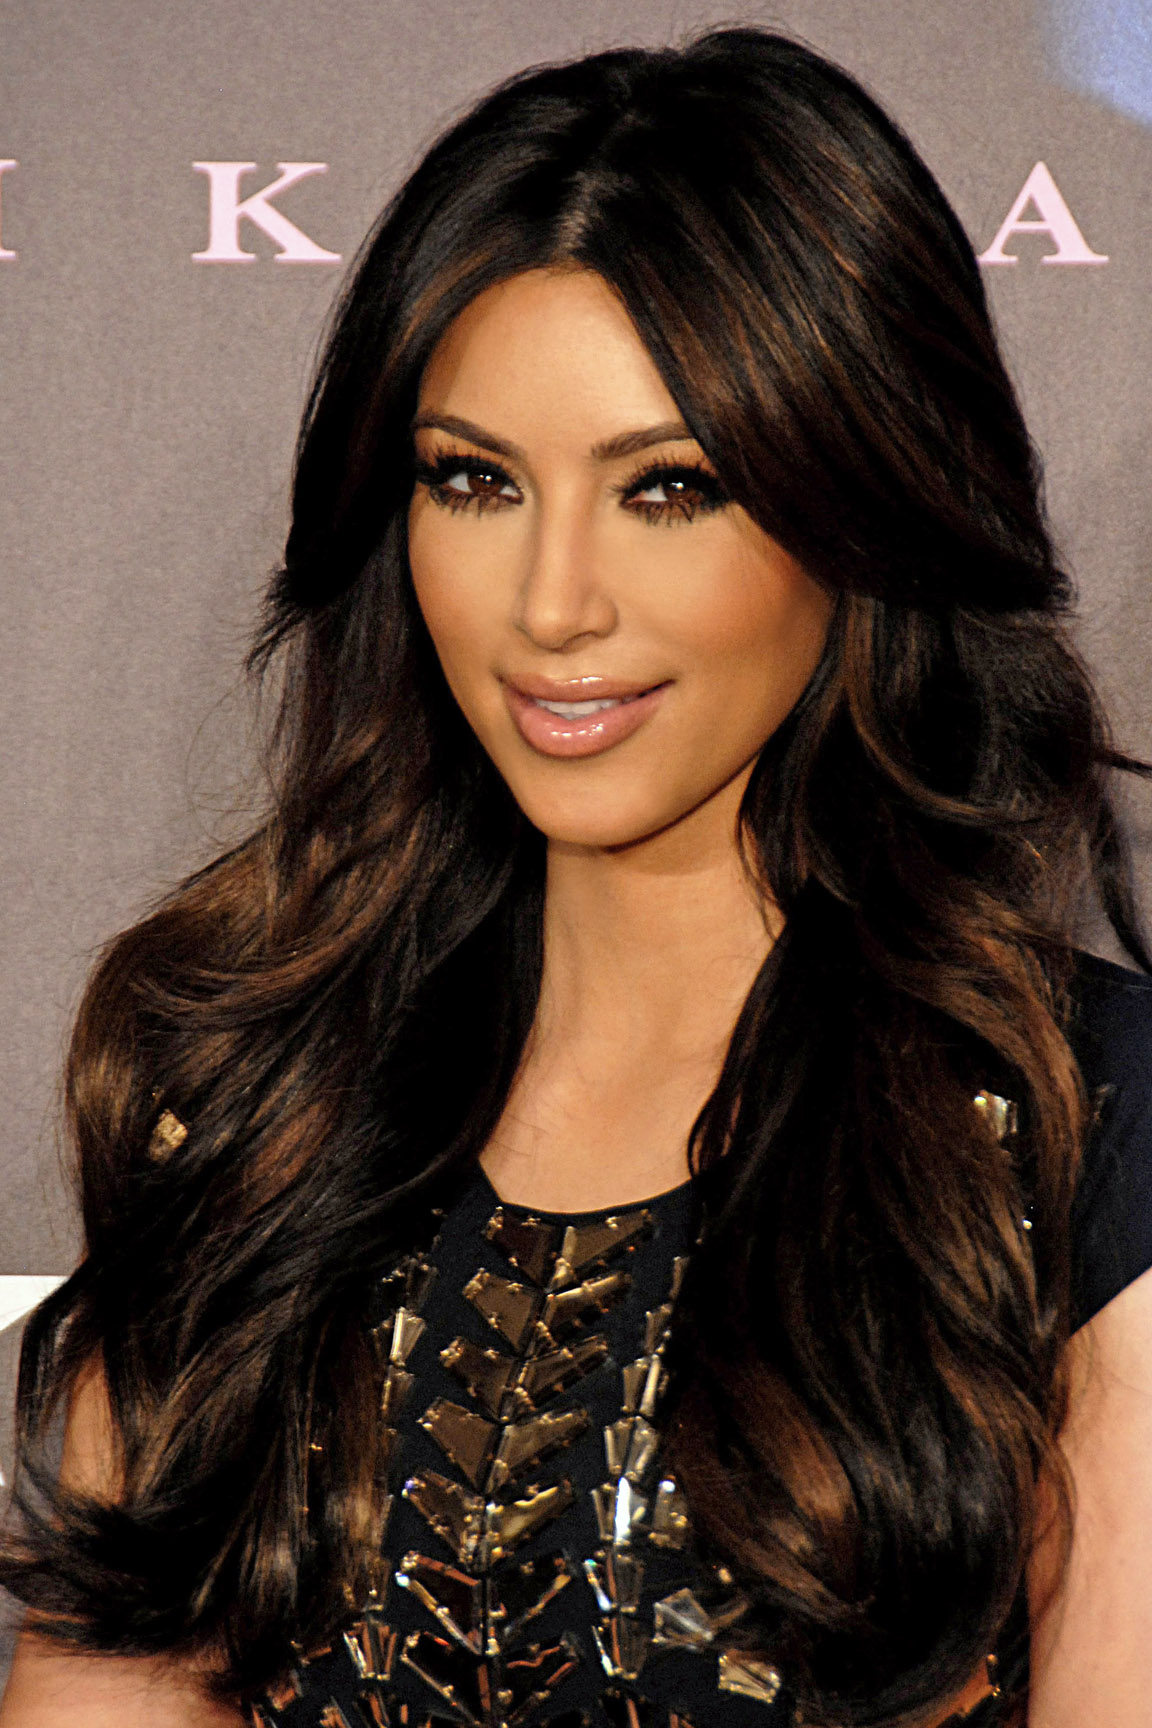 Kim Kardashian Backgrounds, Compatible - PC, Mobile, Gadgets| 1152x1728 px